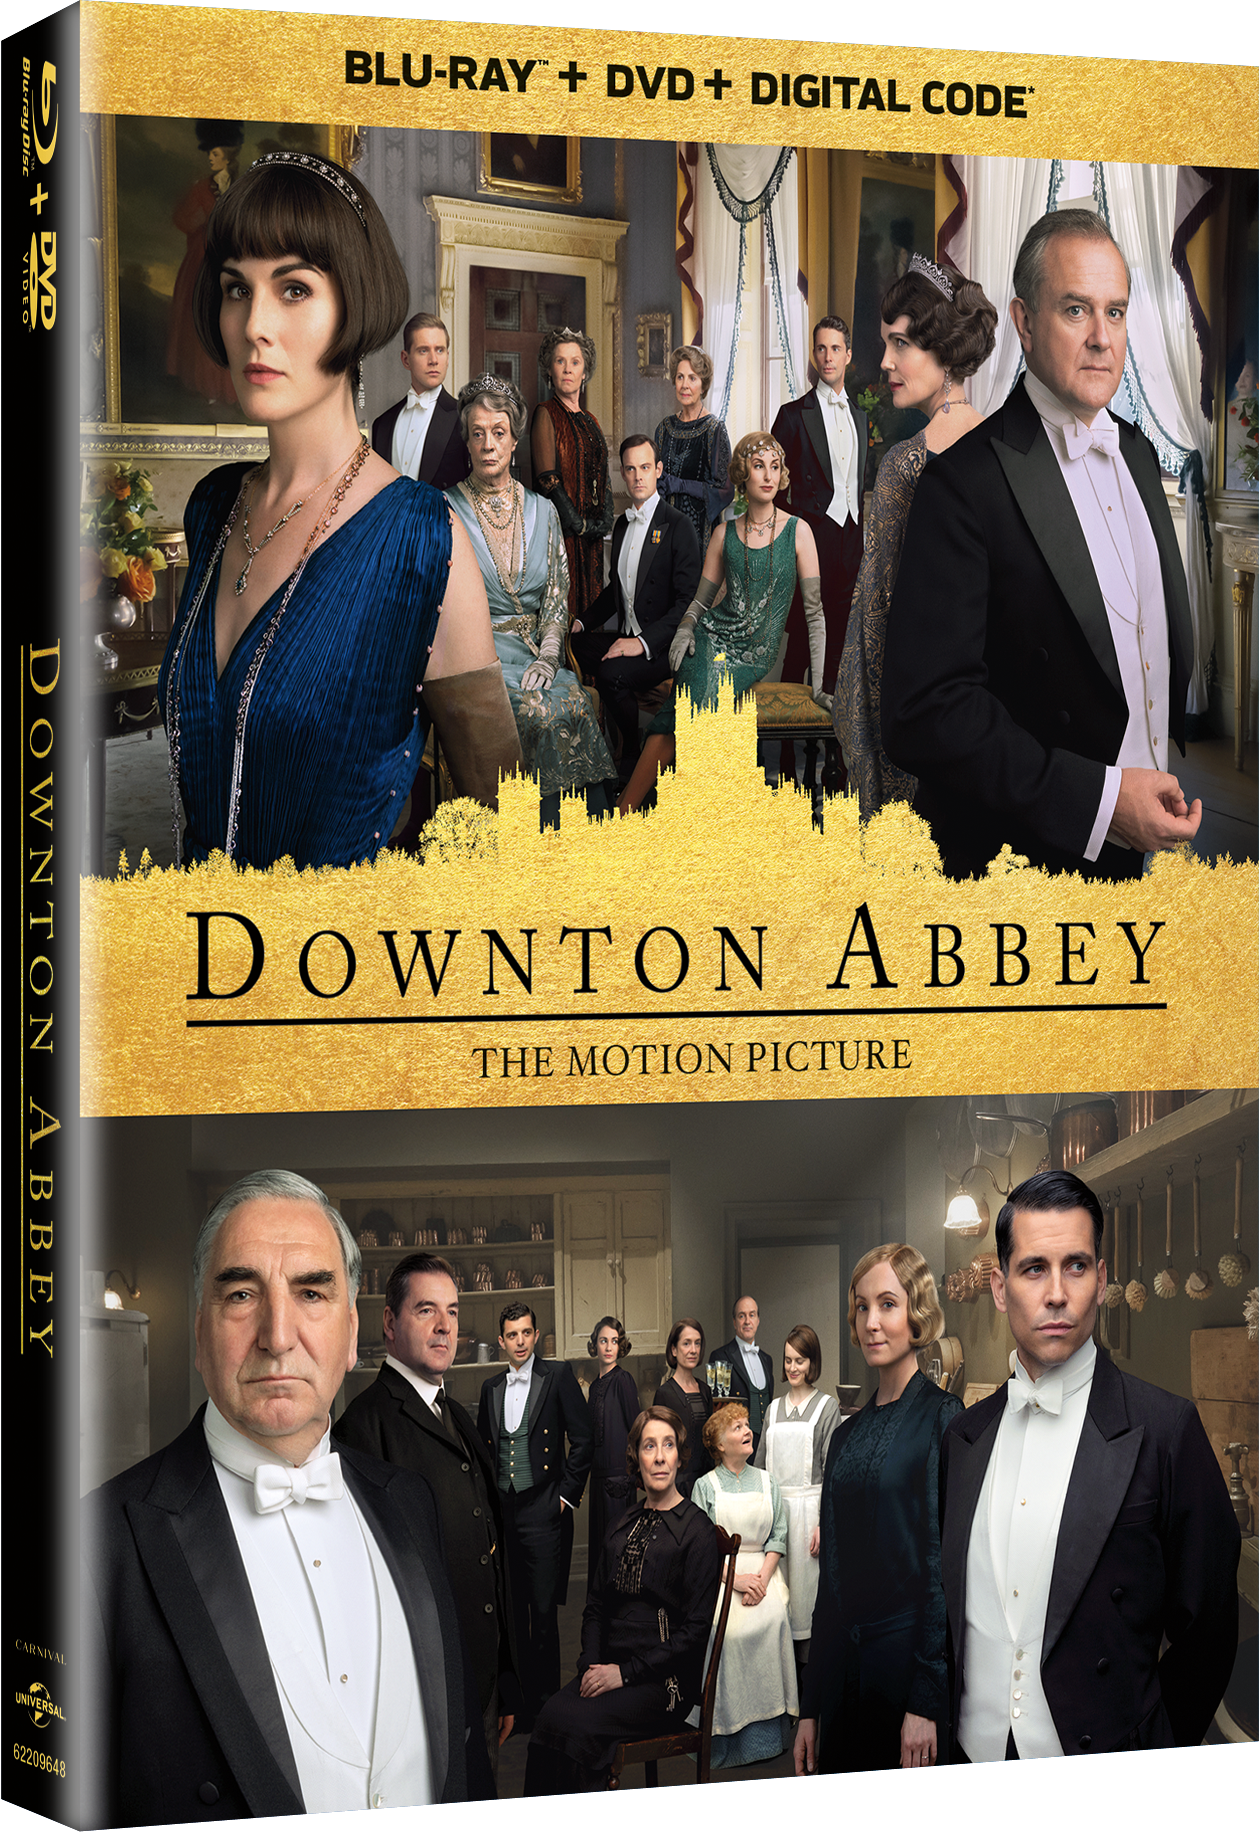 DOWNTON ABBEY - NOW on Blu-ray & DVD1259 x 1835